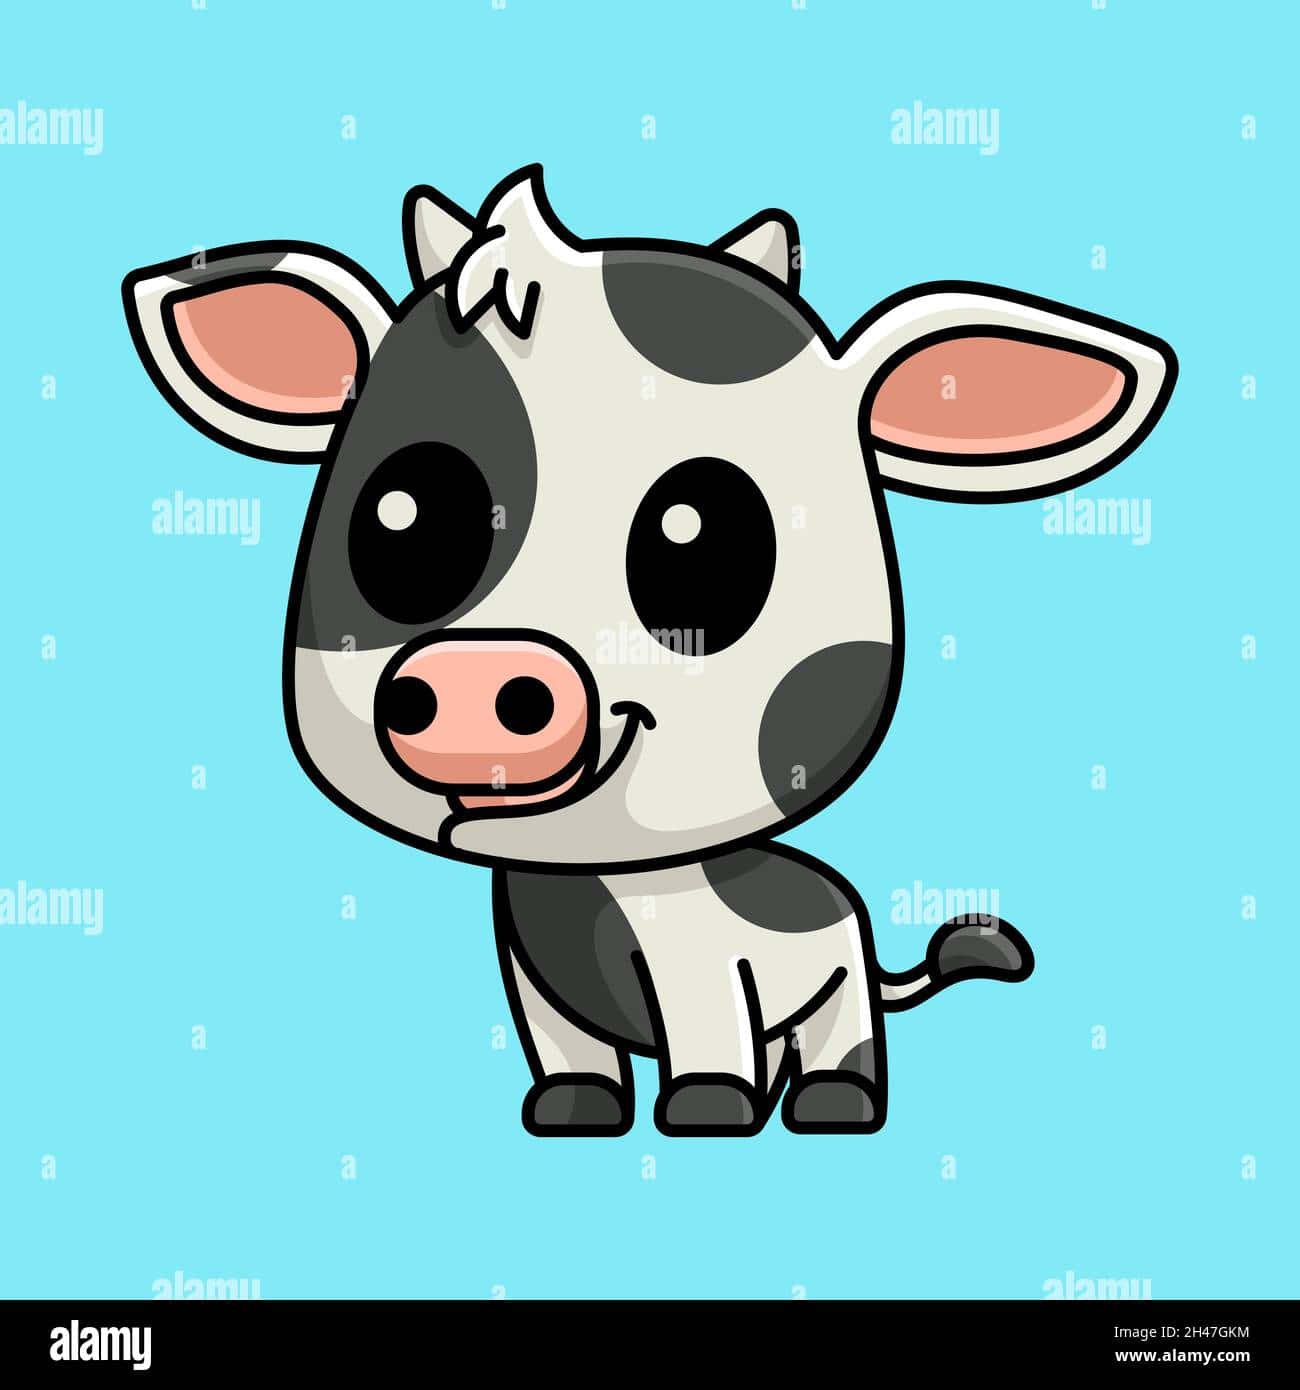 100+] Kawaii Cute Cow Wallpapers